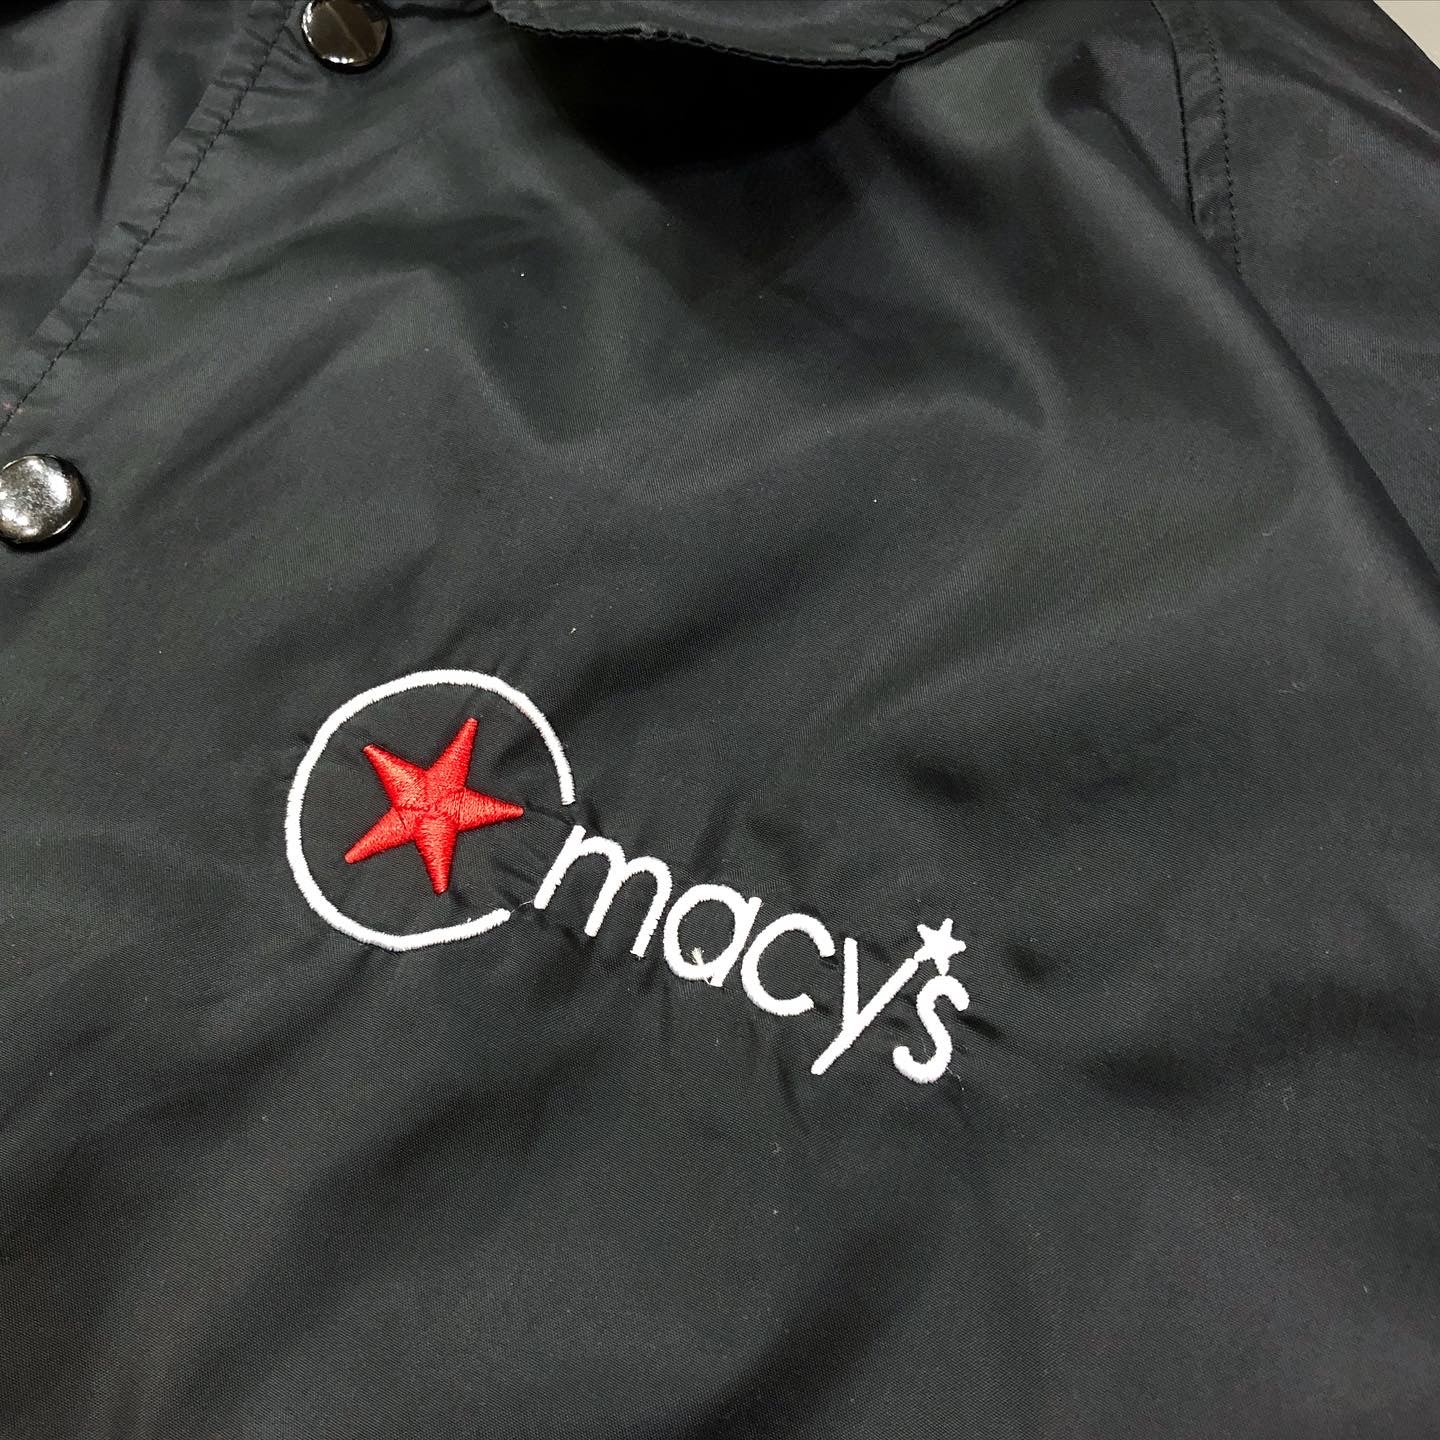 macy's Security Vintage Staff Coach Jacket